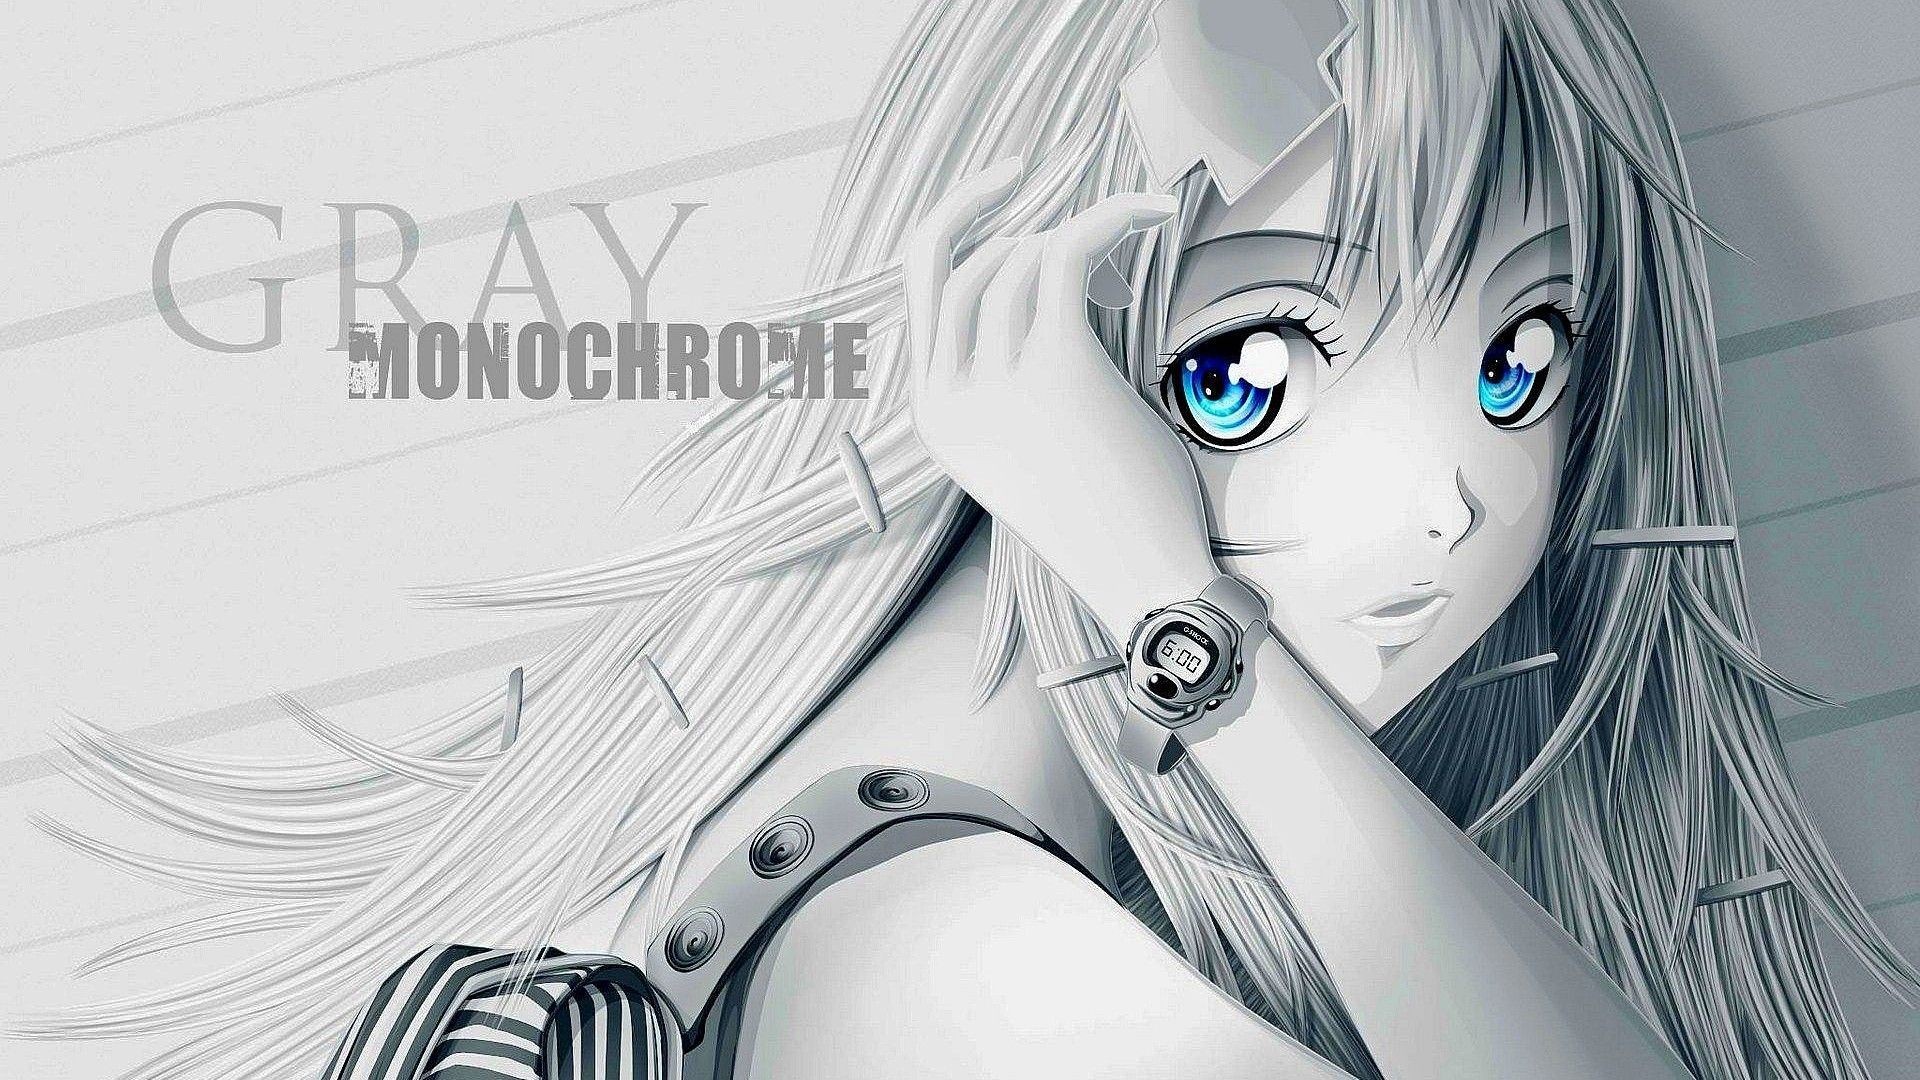  Cute  Anime  wallpaper  HD    Download free stunning High 